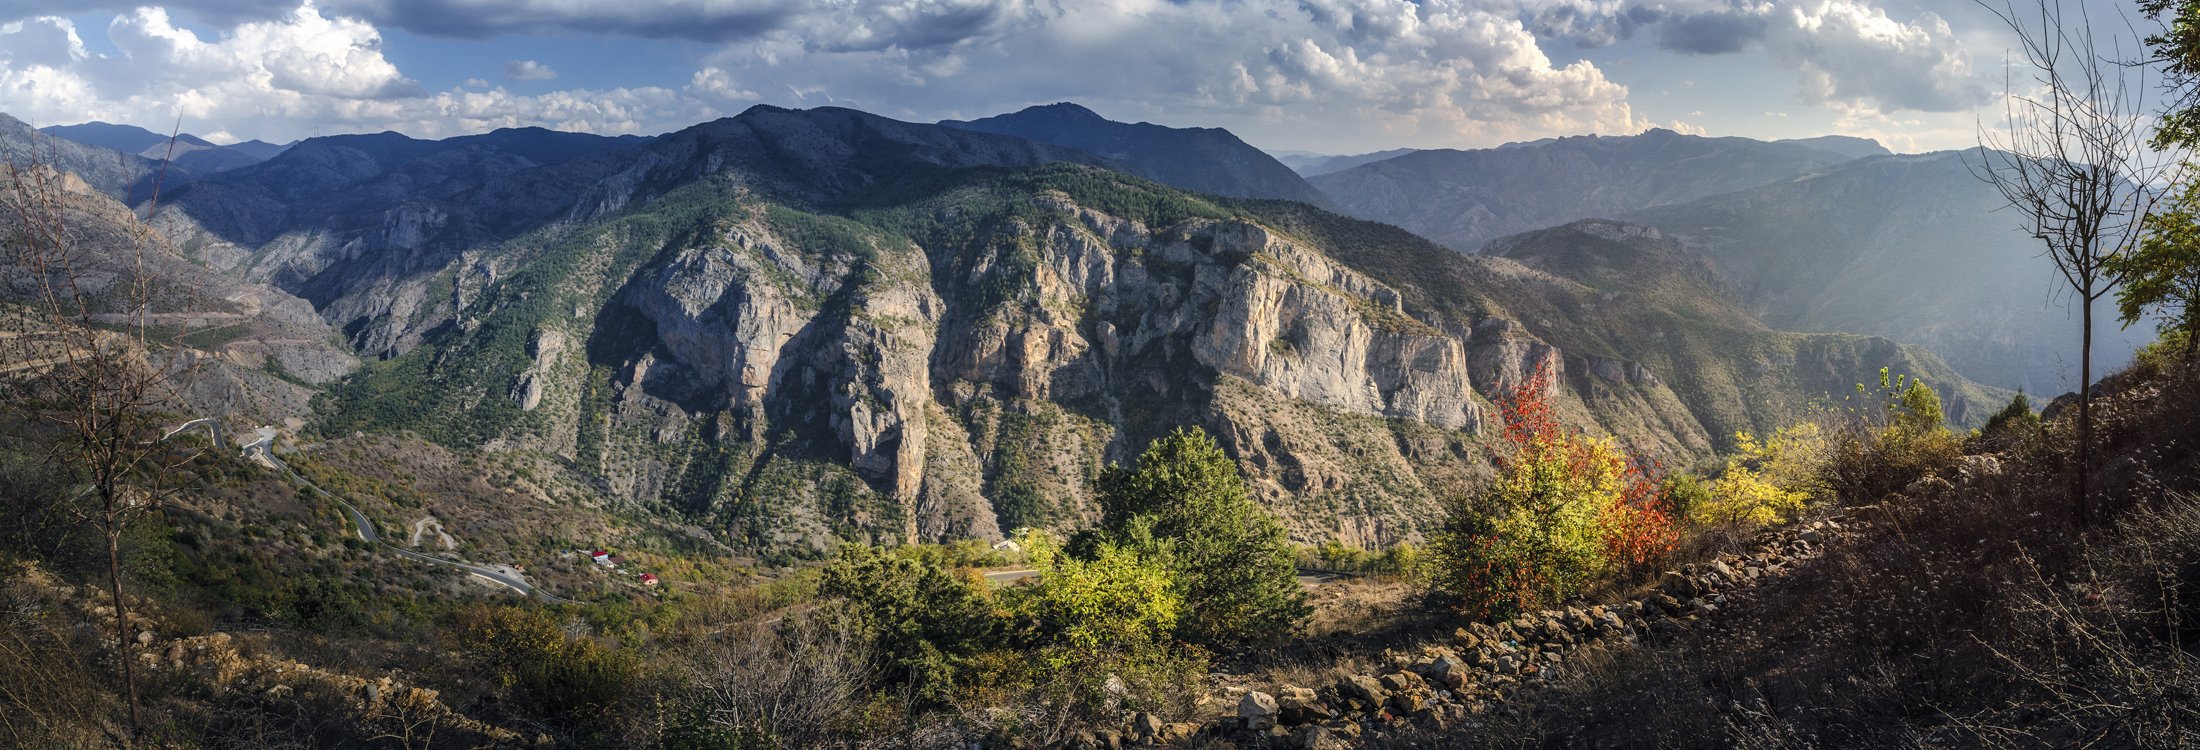 пейзаж турция горы панорама природа travel nature landscape turkey mountains путешествия, Дмитрий Петренко